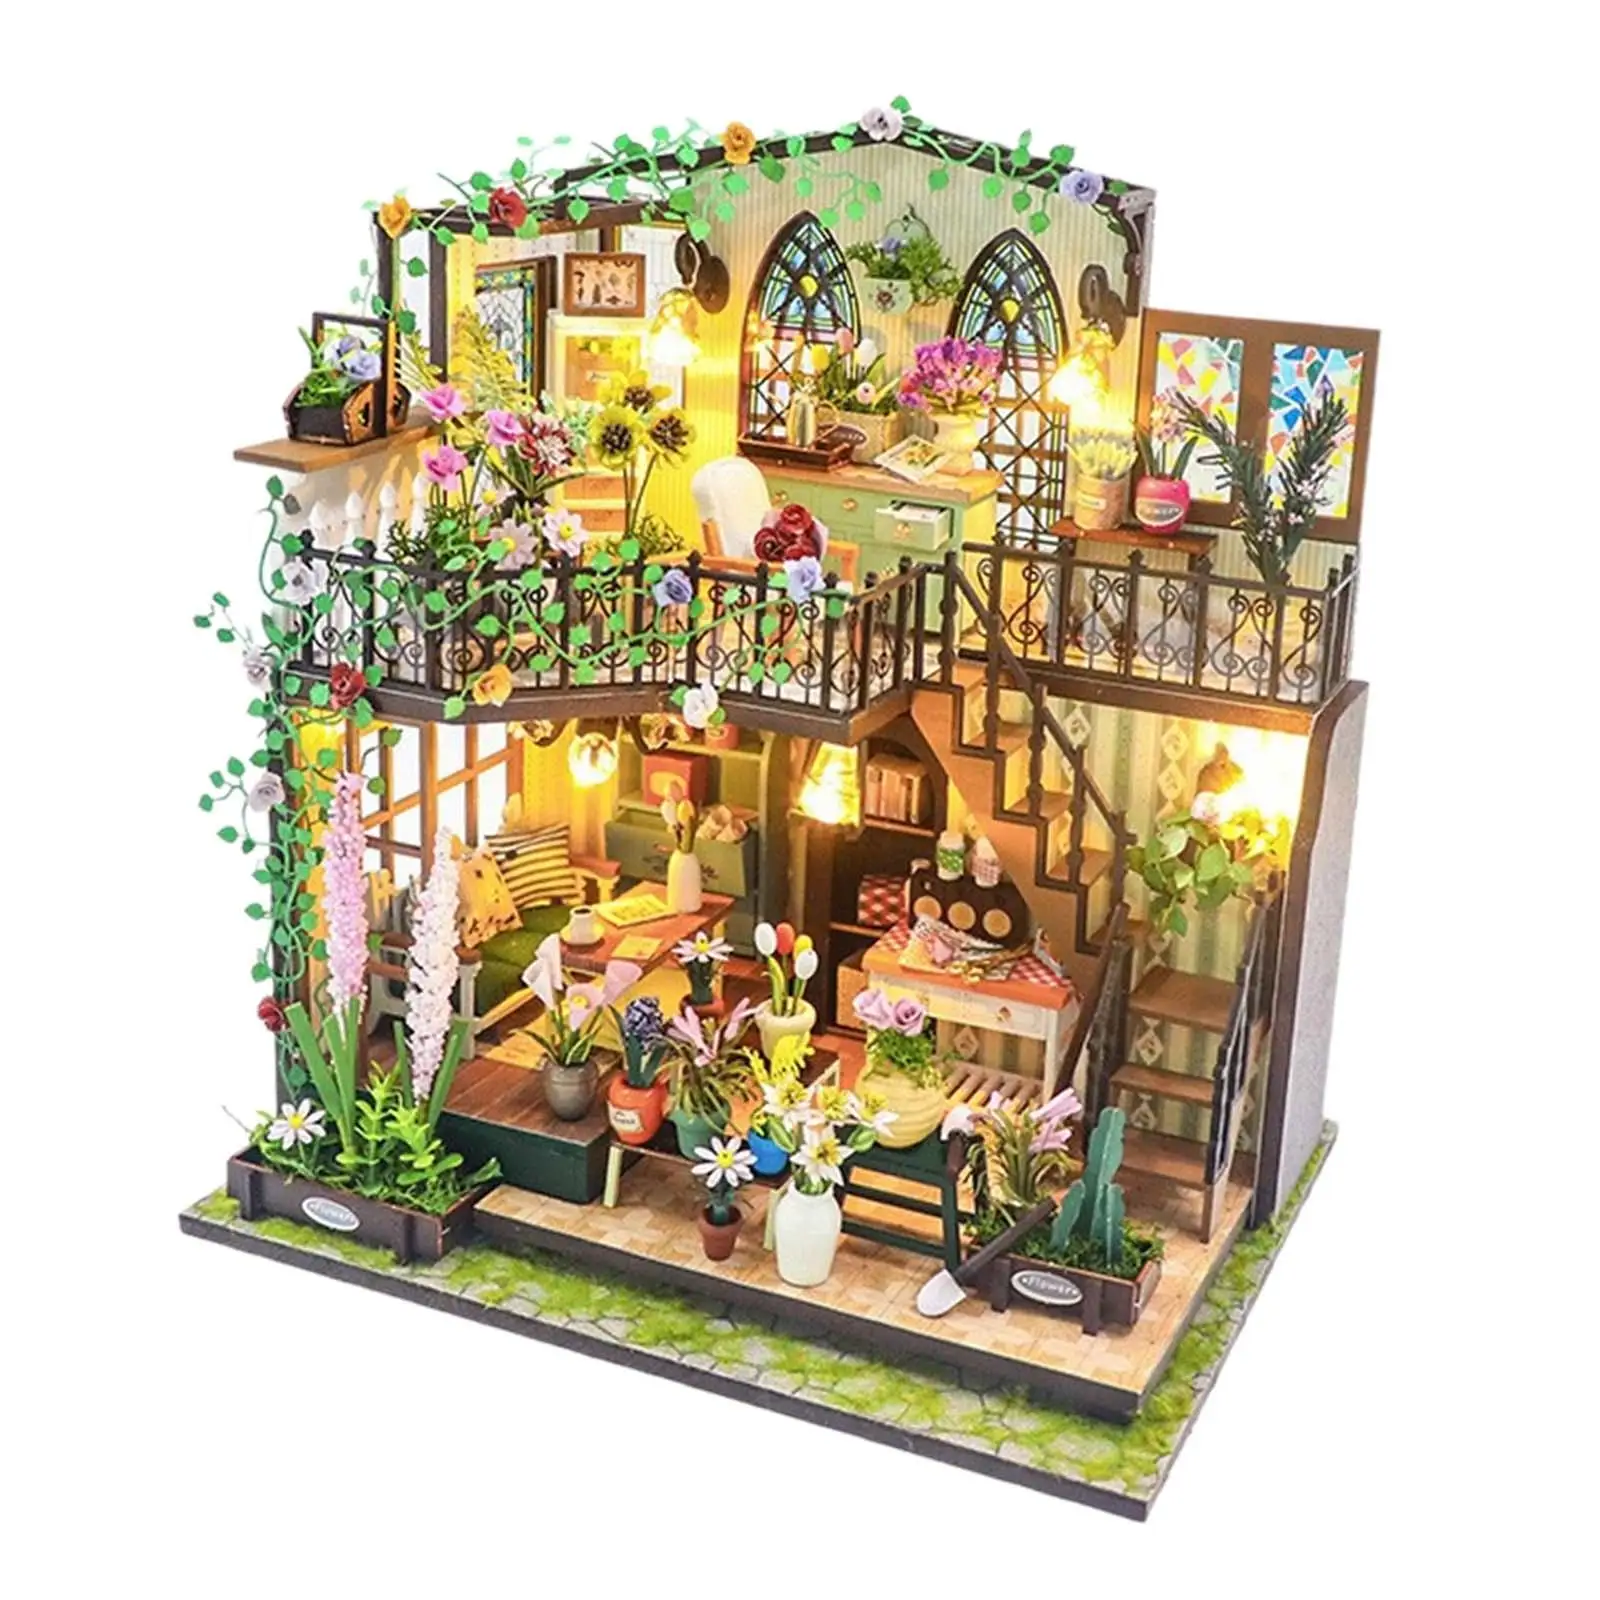 

Dollhouse DIY Miniature Kits Tiny House Building Set DIY Crafts Mini House Model for Birthday Gift Boys Girls Adults Kids